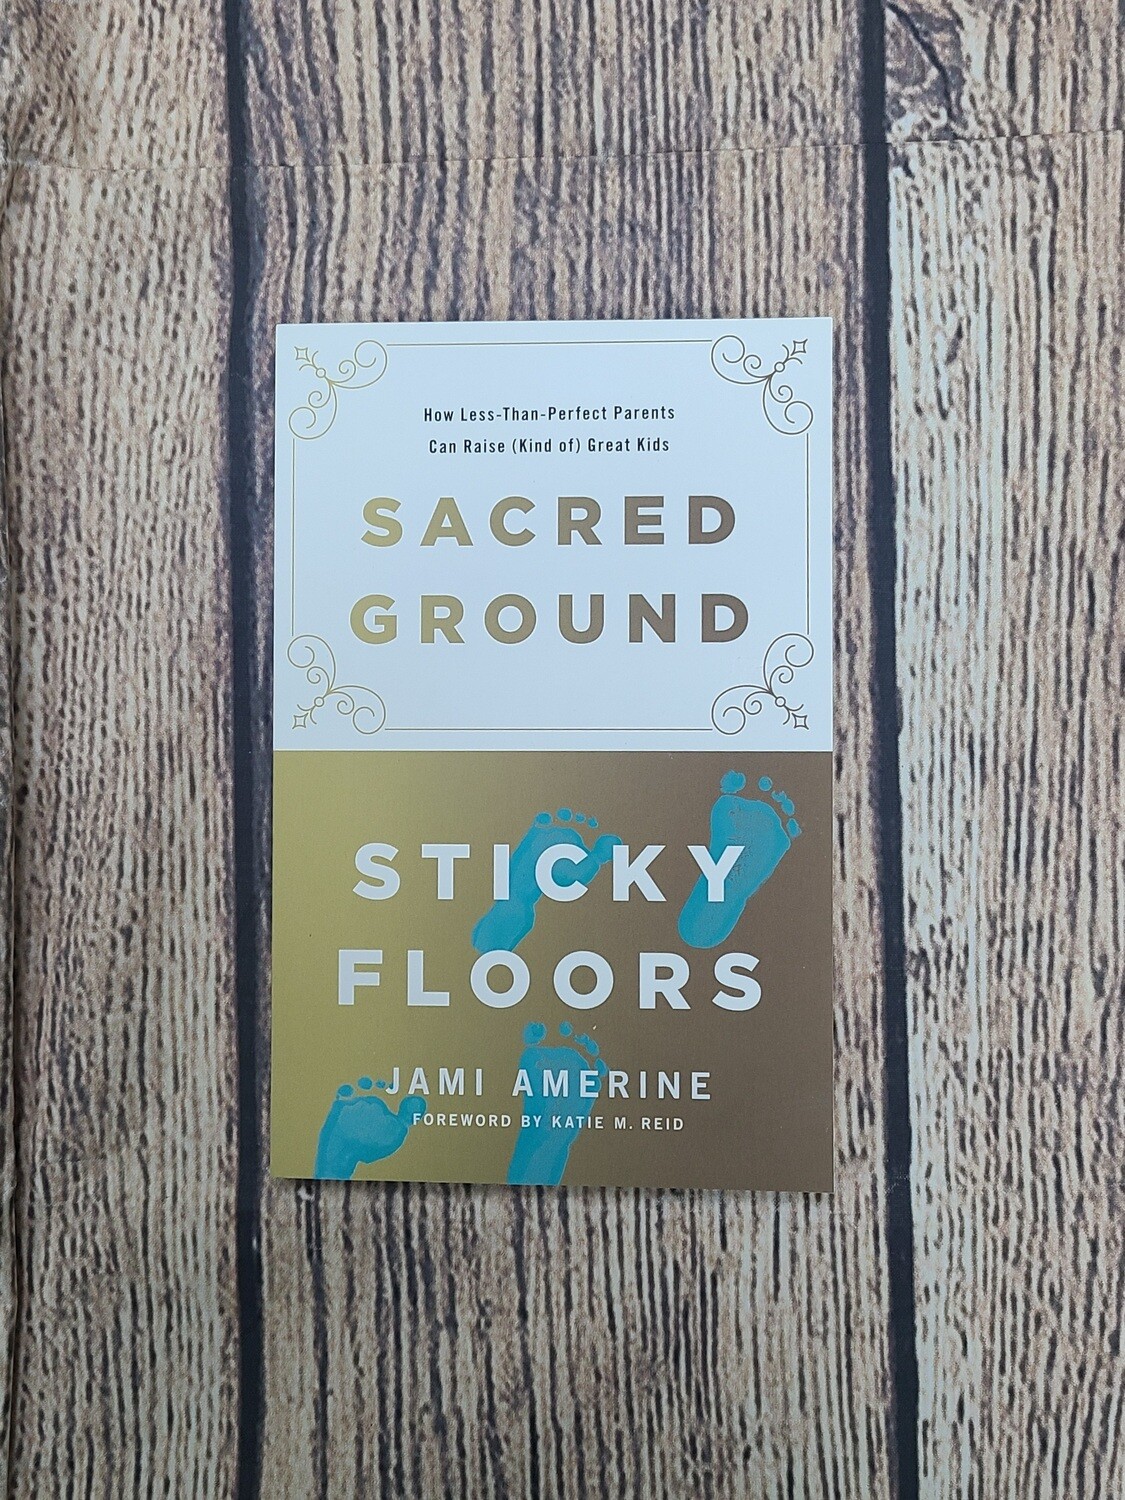 Sacred Ground: Sticky Floors by Jami Amerine